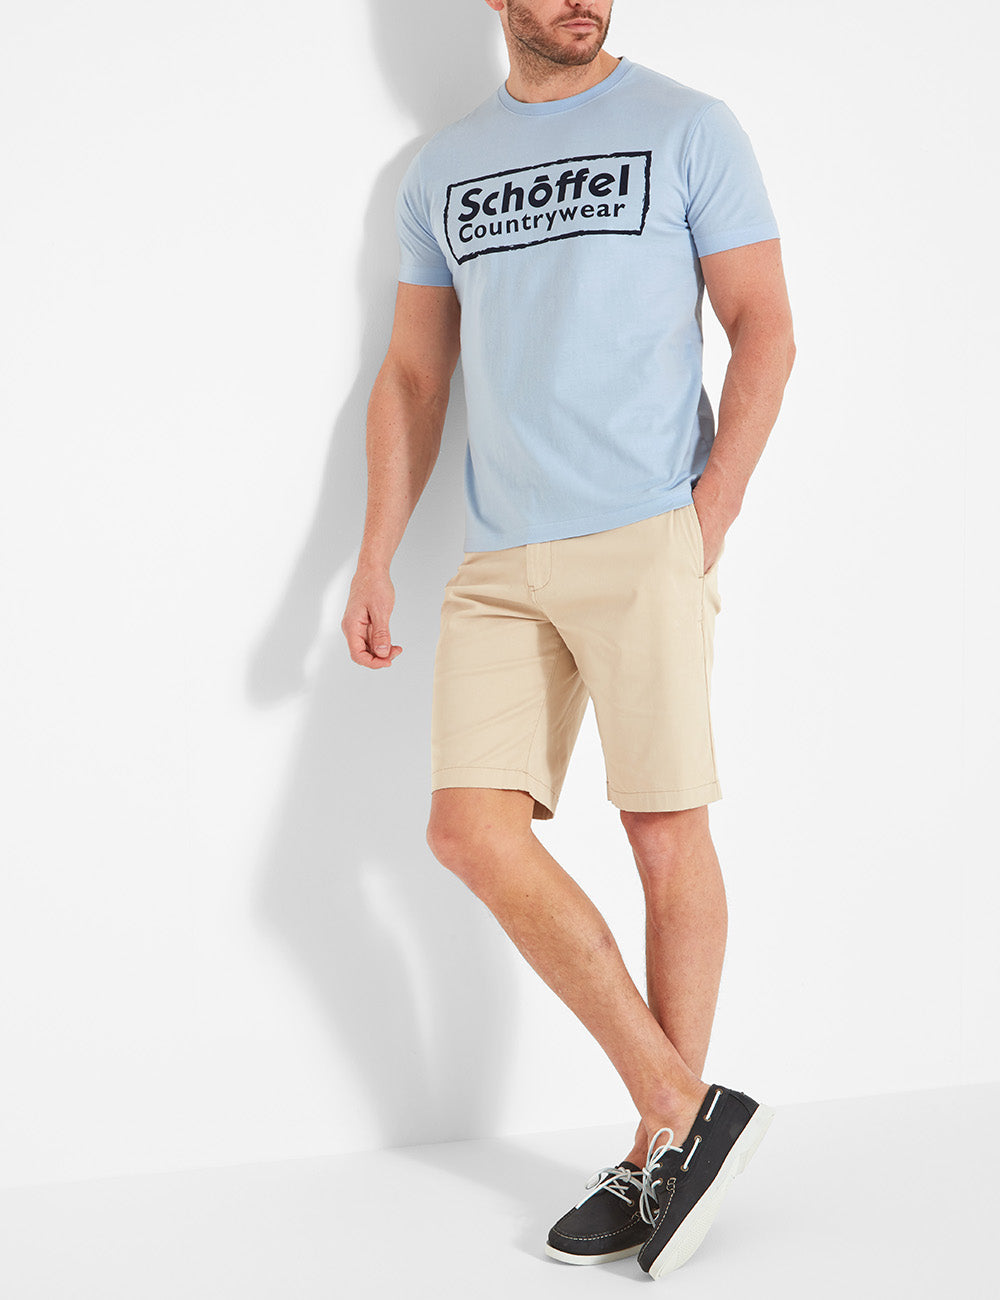 Schoffel Heritage T-Shirt - Pale Blue